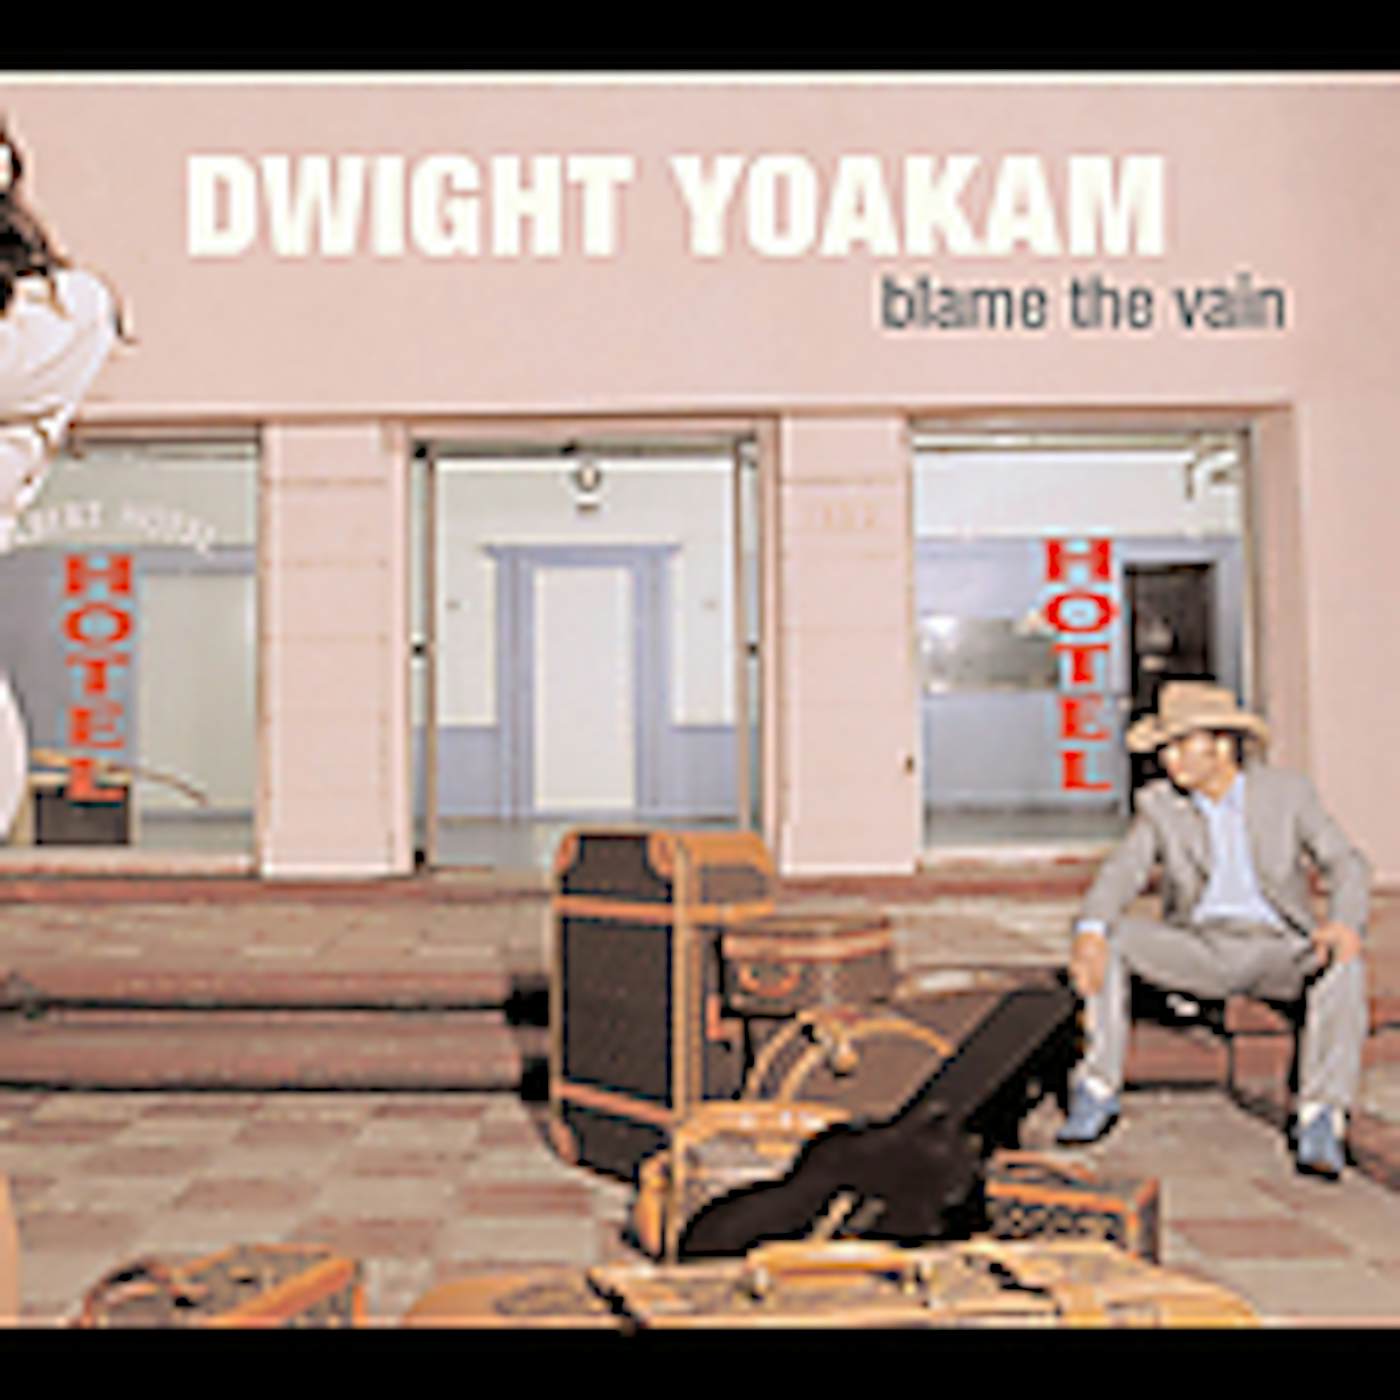 Dwight Yoakam BLAME THE VAIN CD